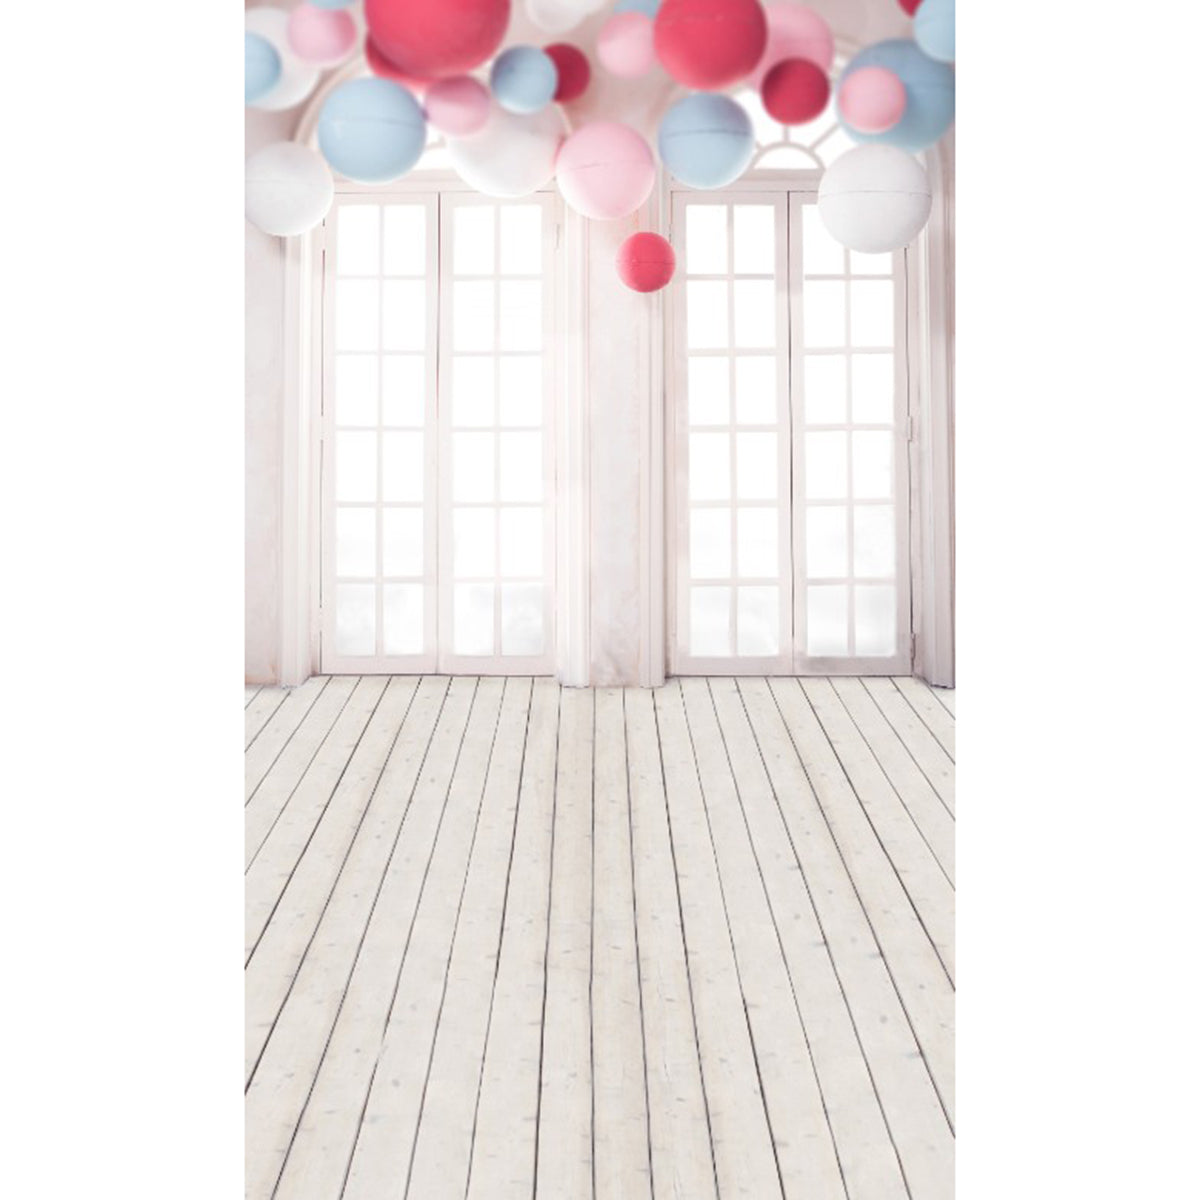 5x7FT Vinyl Balloon Windows Wood Floor Photography Backdrop Background Studio Prop